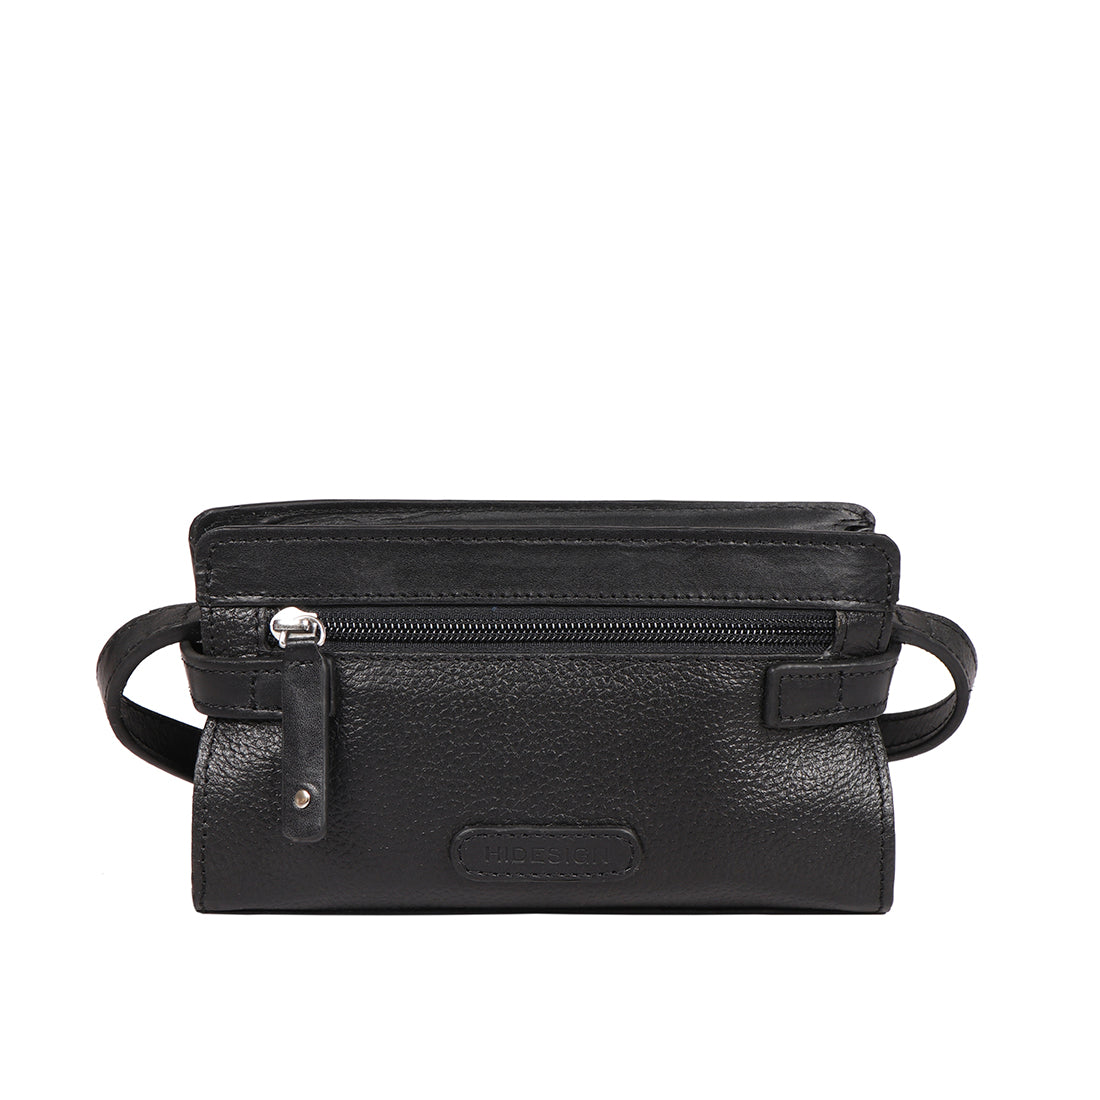 Buy Black Infinite 03 Sling Bag Online - Hidesign